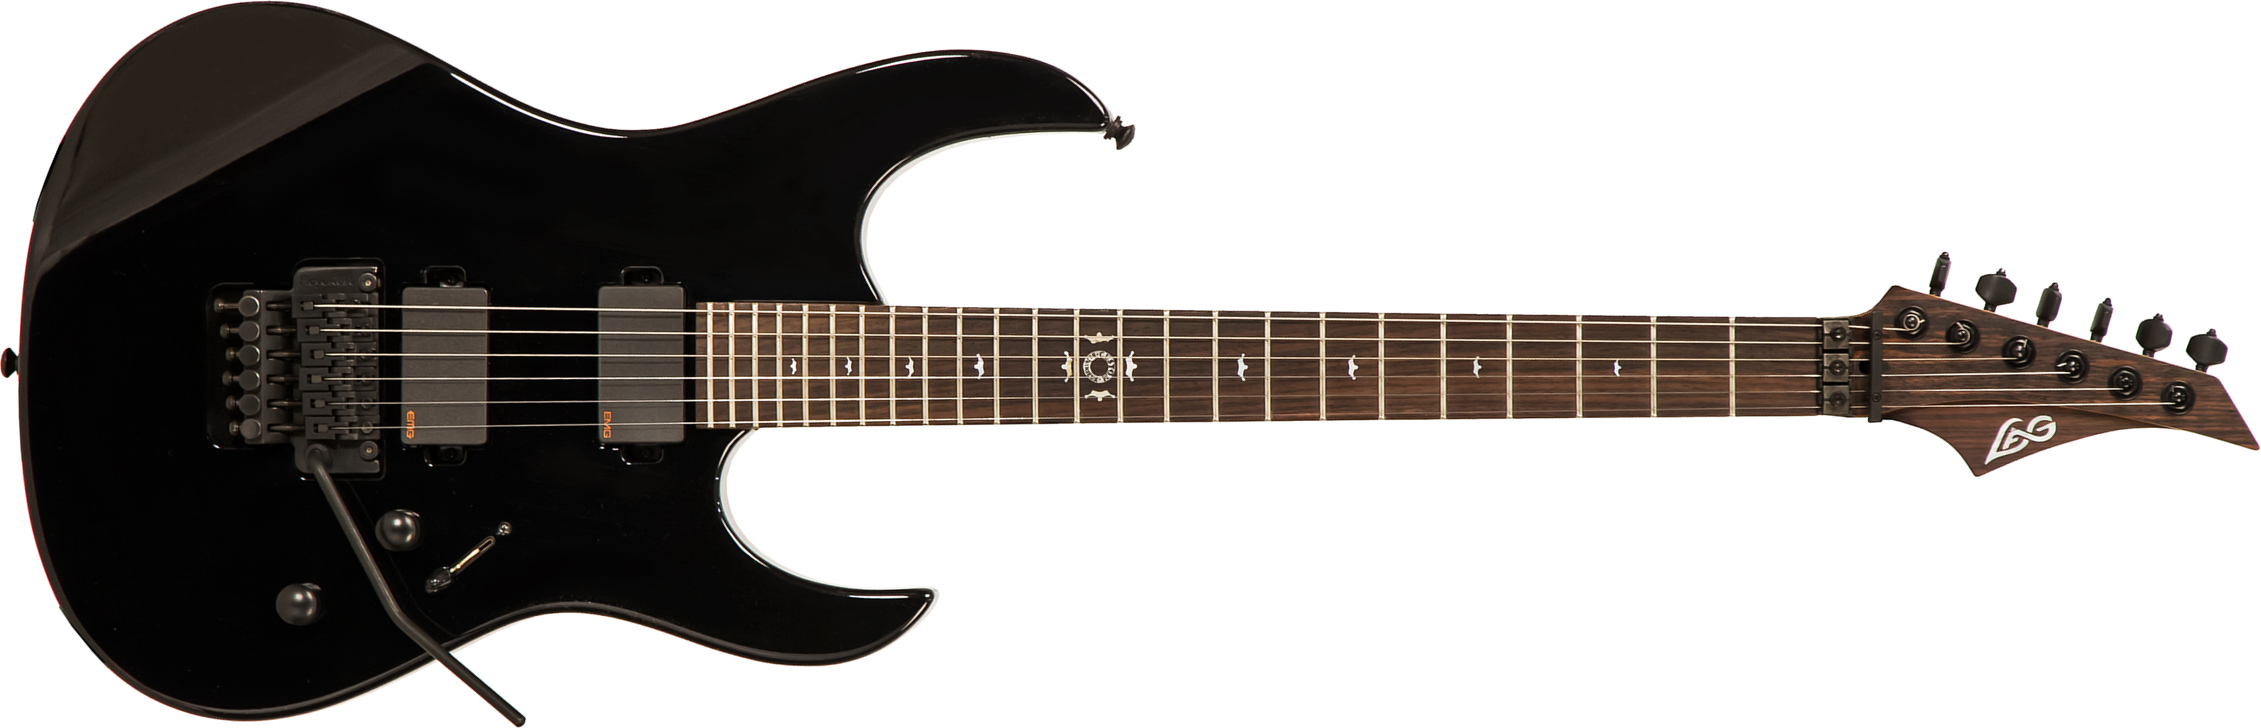 Lag Arkane Custom Bedarieux 2h Emg Fr Rw #023294 - Black - Str shape electric guitar - Main picture